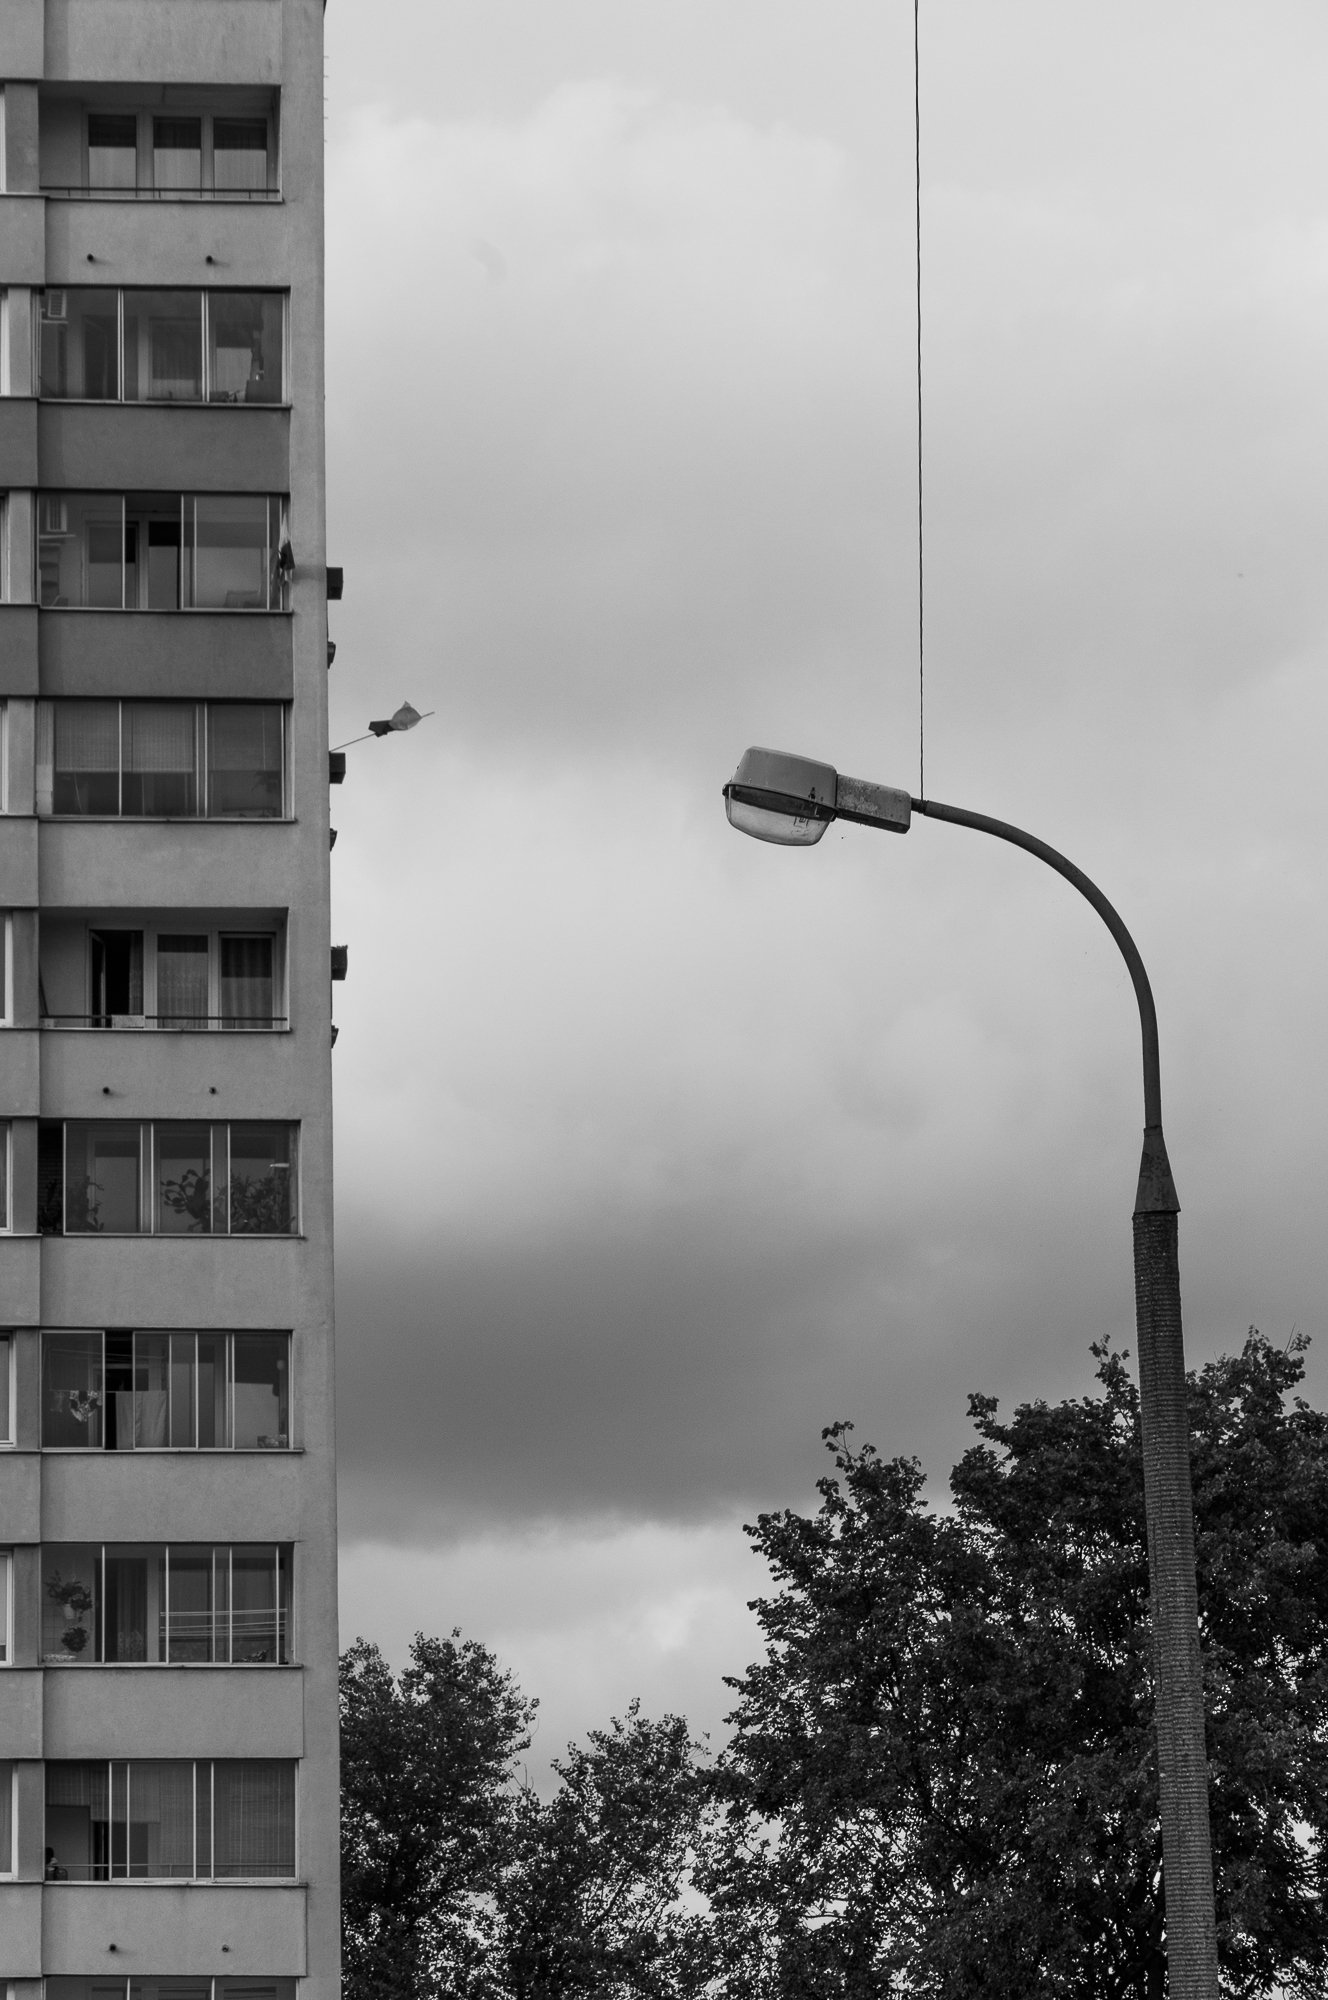 Adam Mazek Photography Warsaw (Warszawa) 2018. Post: "The tragedy of my artistic activity." Perspective. Street lamp. Death. Minimalism.